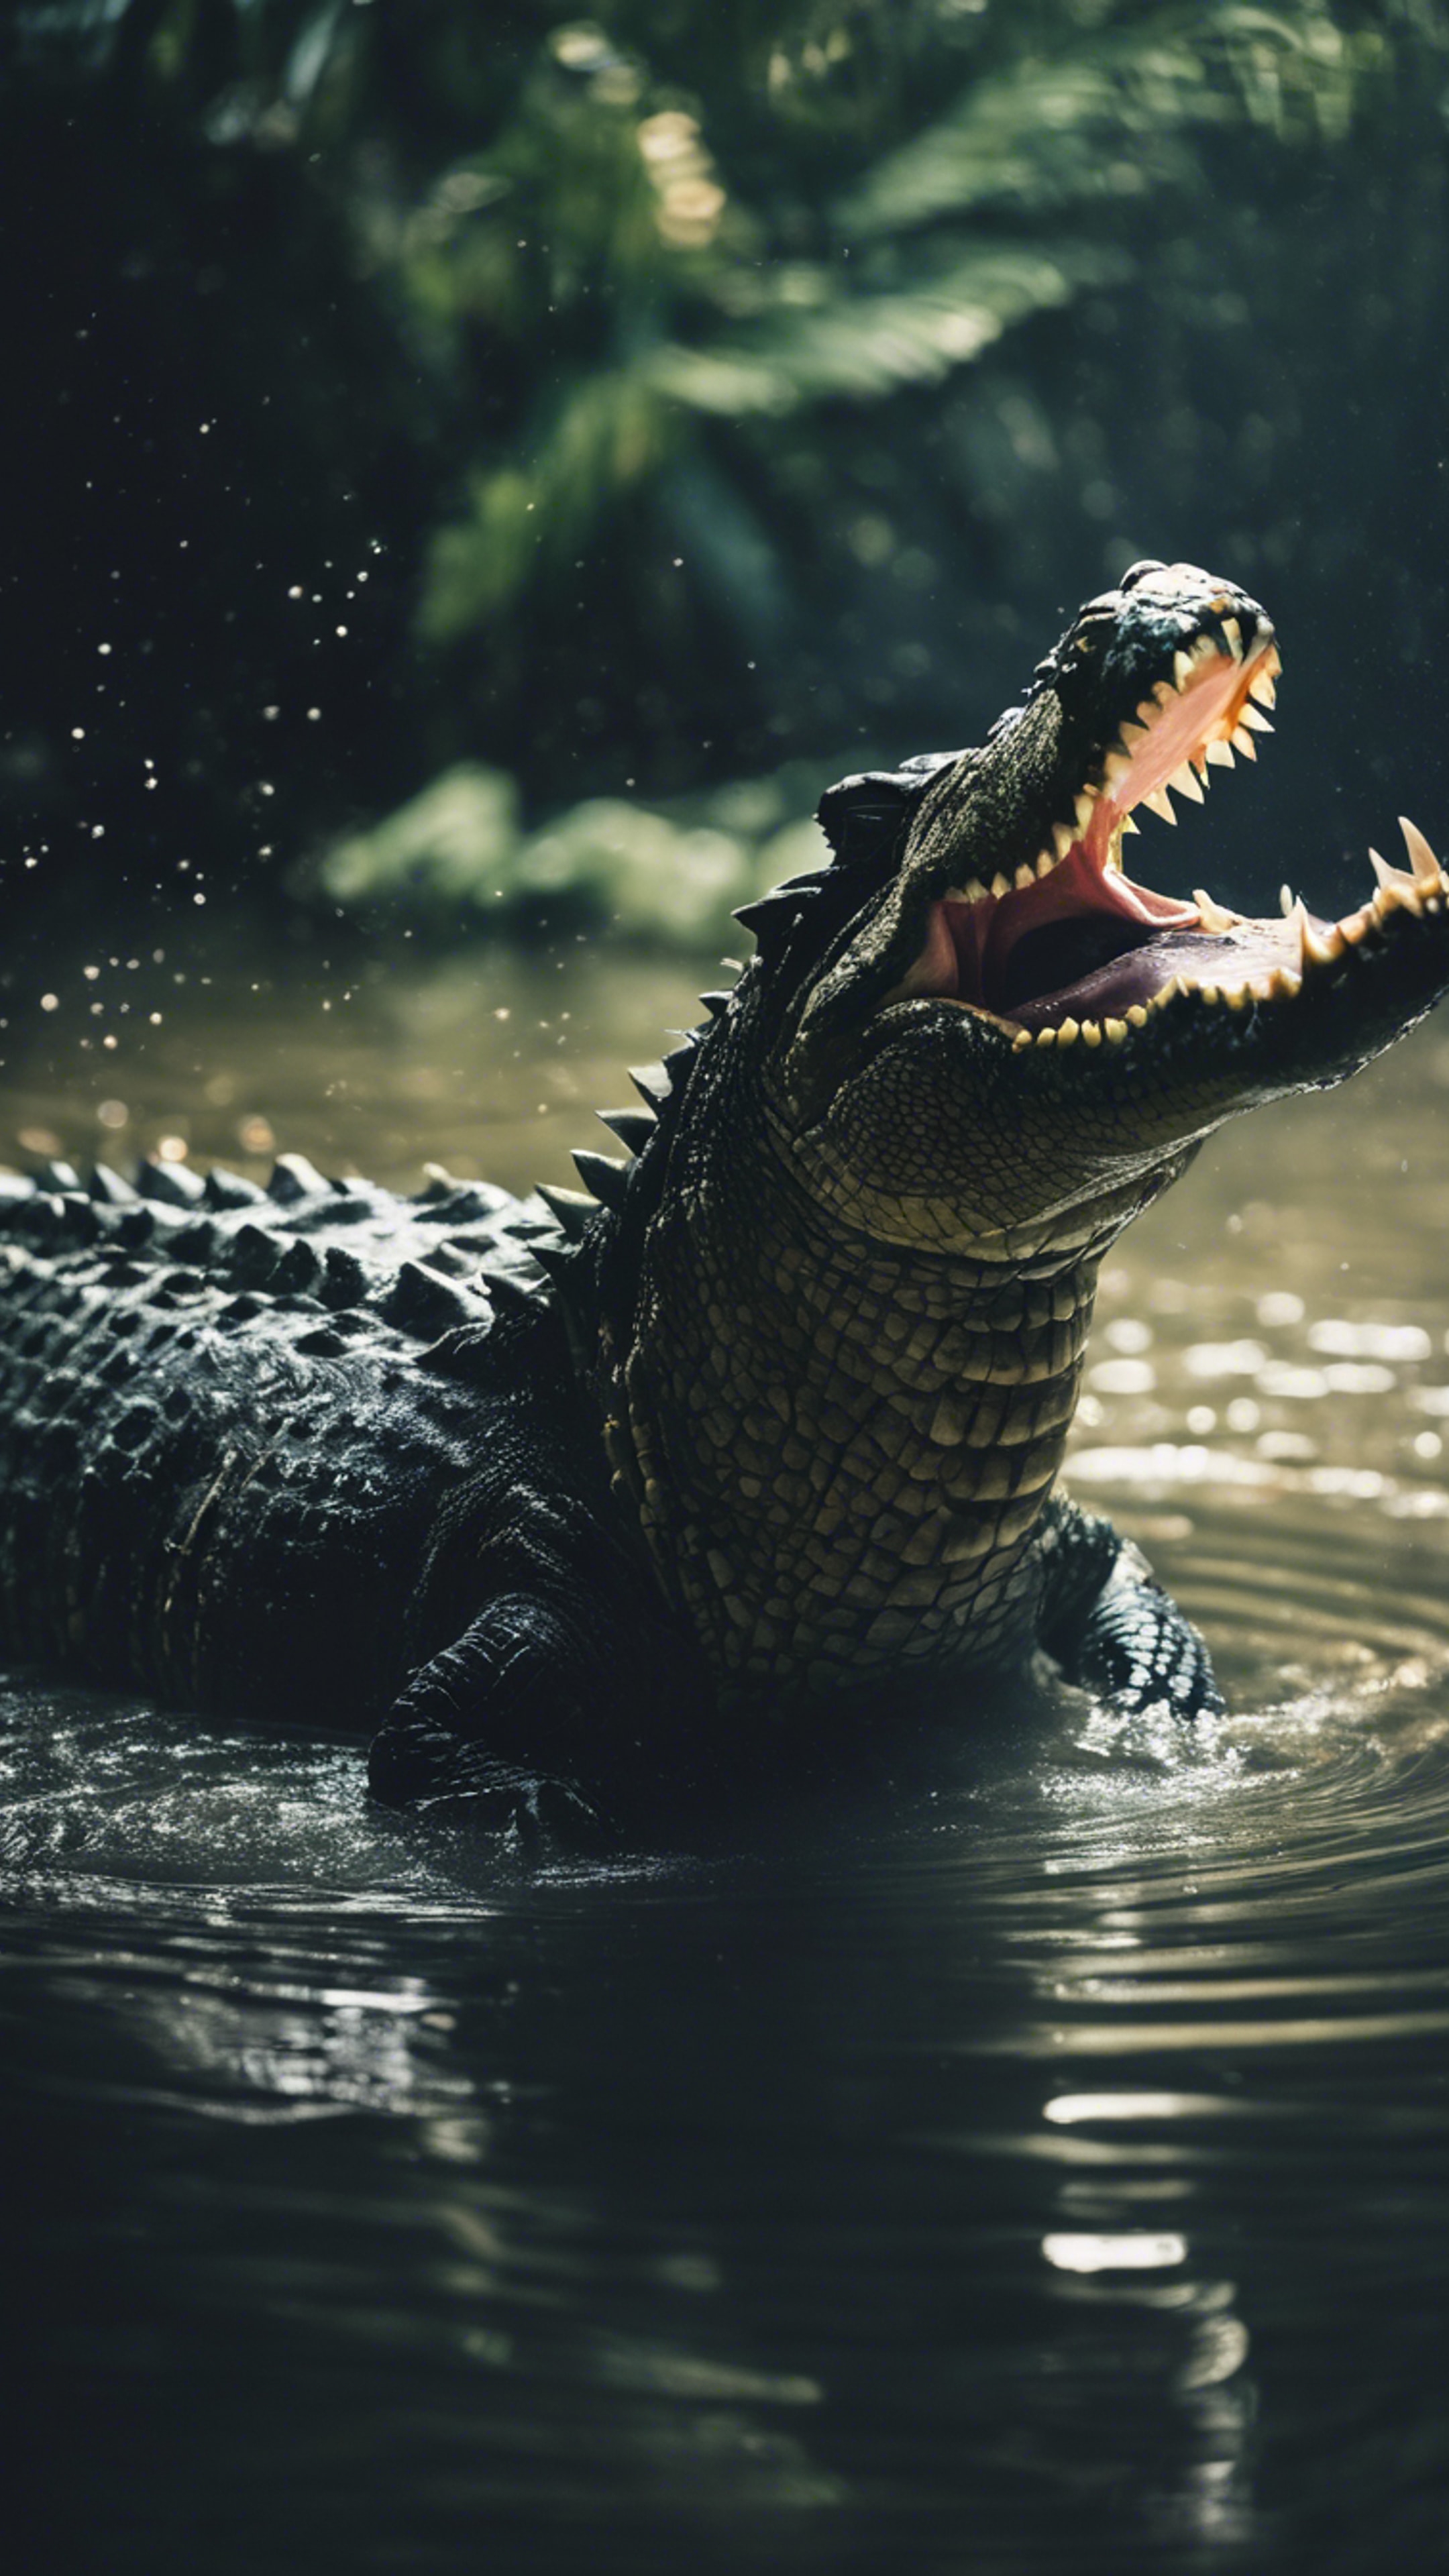 Two crocodiles engaging in a territorial battle in the middle of a dark lagoon. Divar kağızı[ccc66b55c2b3408d8928]